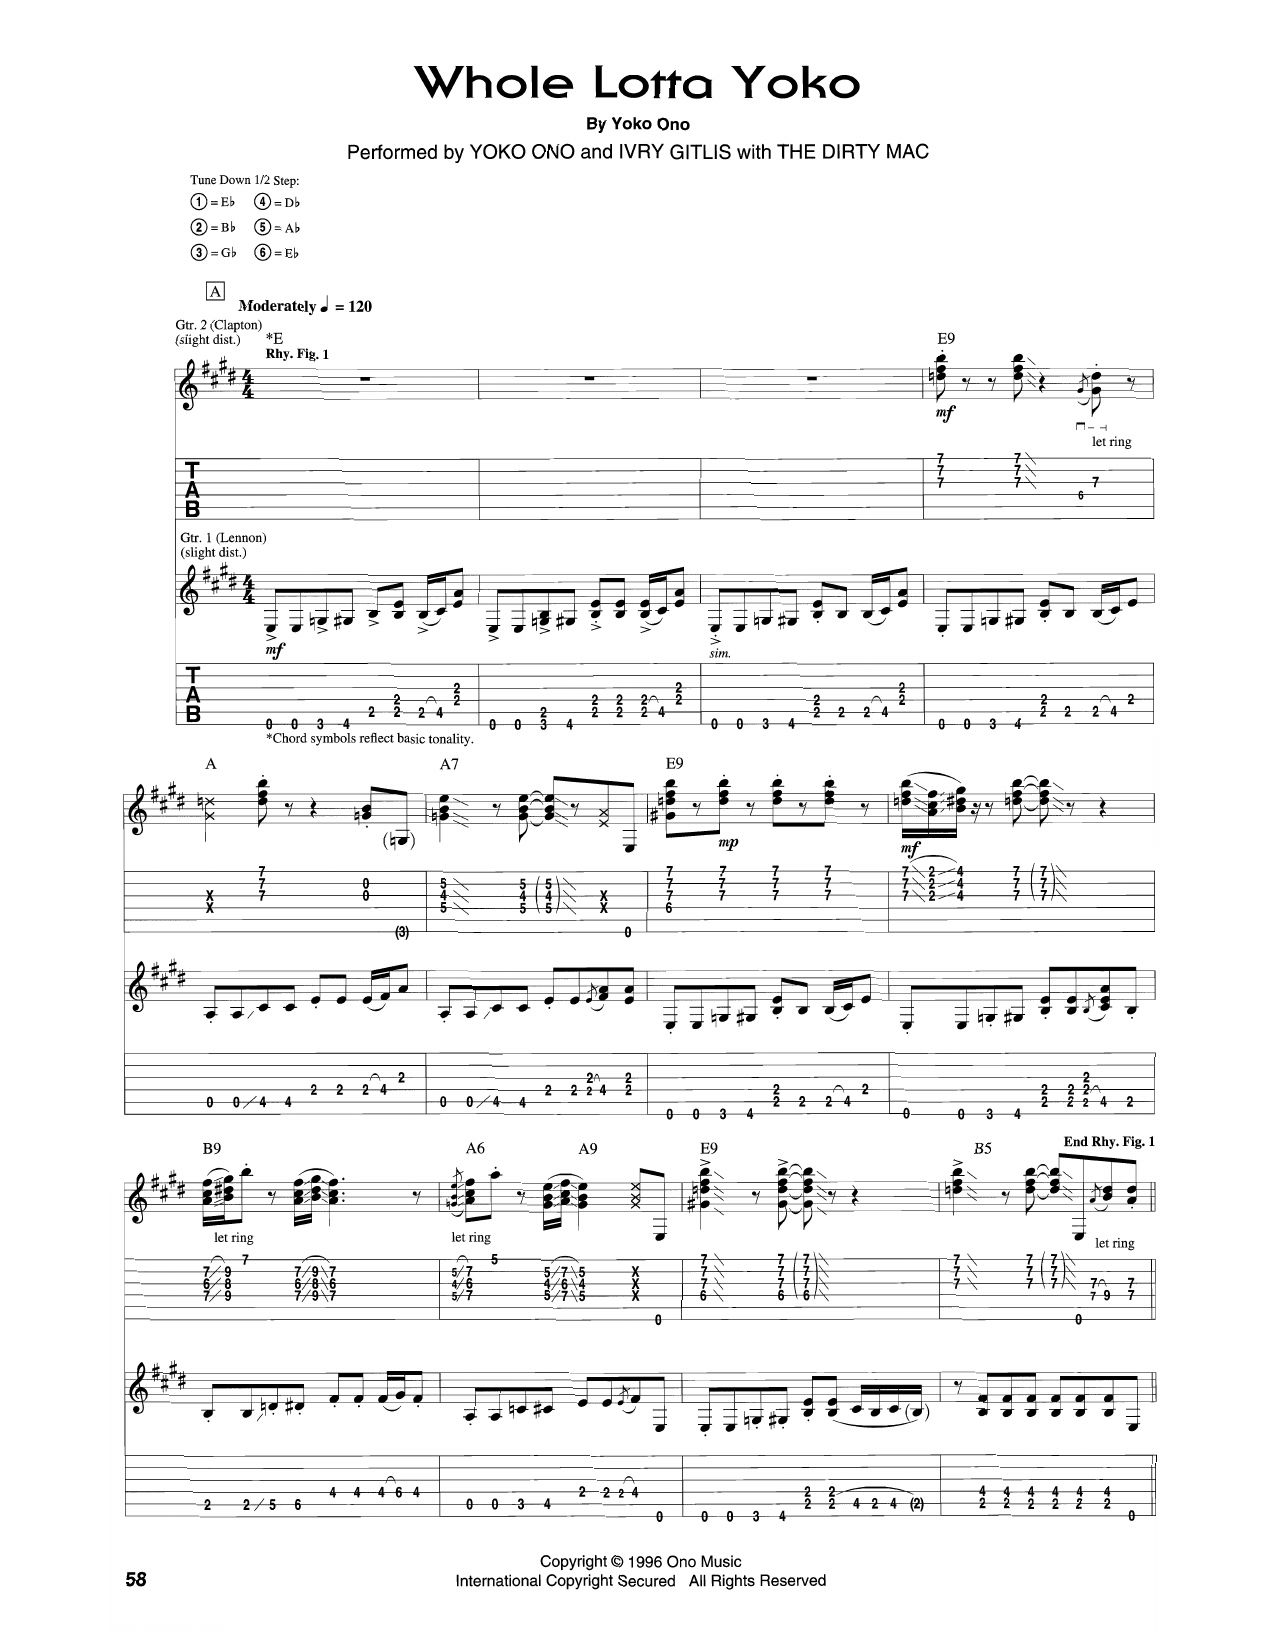 Yoko Ono Whole Lotta Yoko Sheet Music Notes & Chords for Guitar Tab - Download or Print PDF